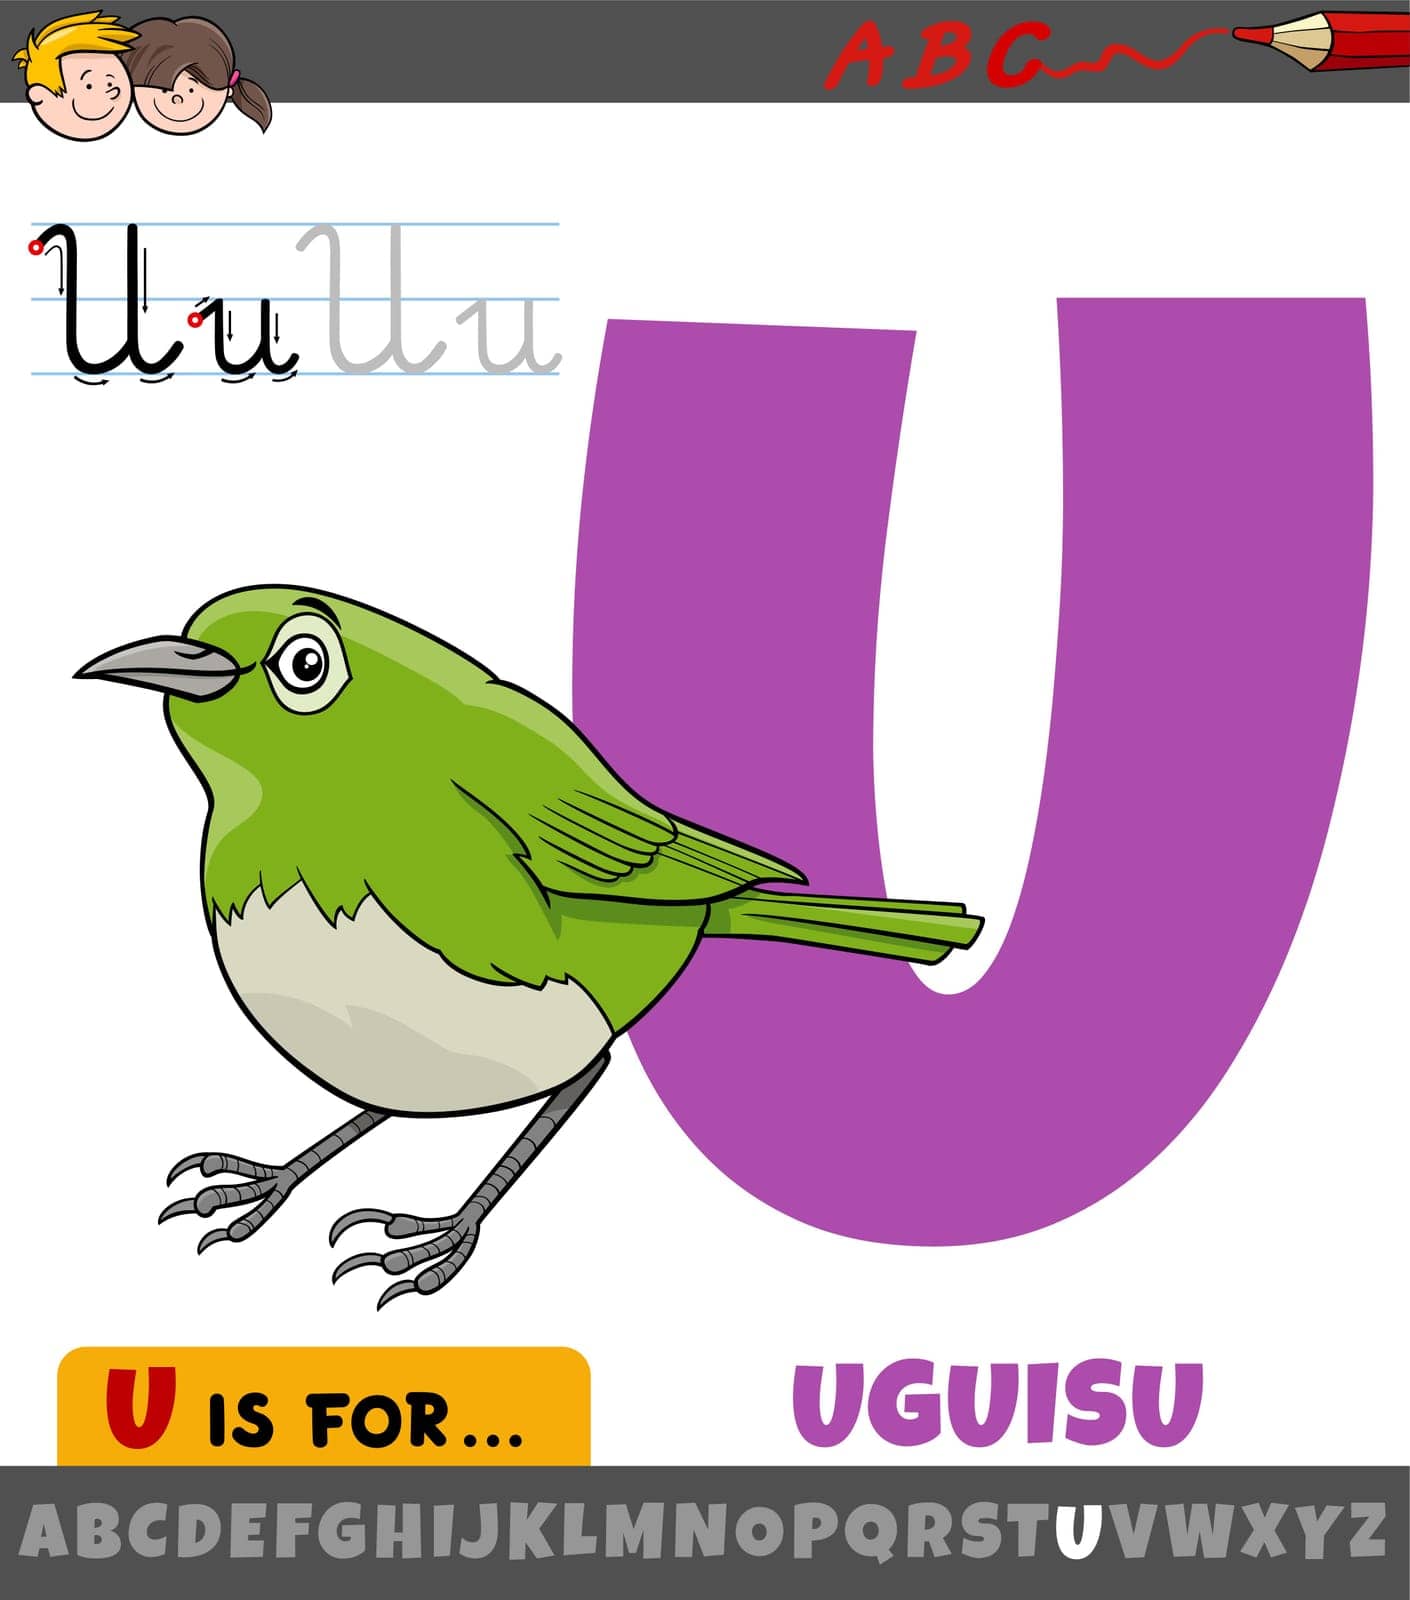 letter U from alphabet with cartoon uguisu bird character by izakowski